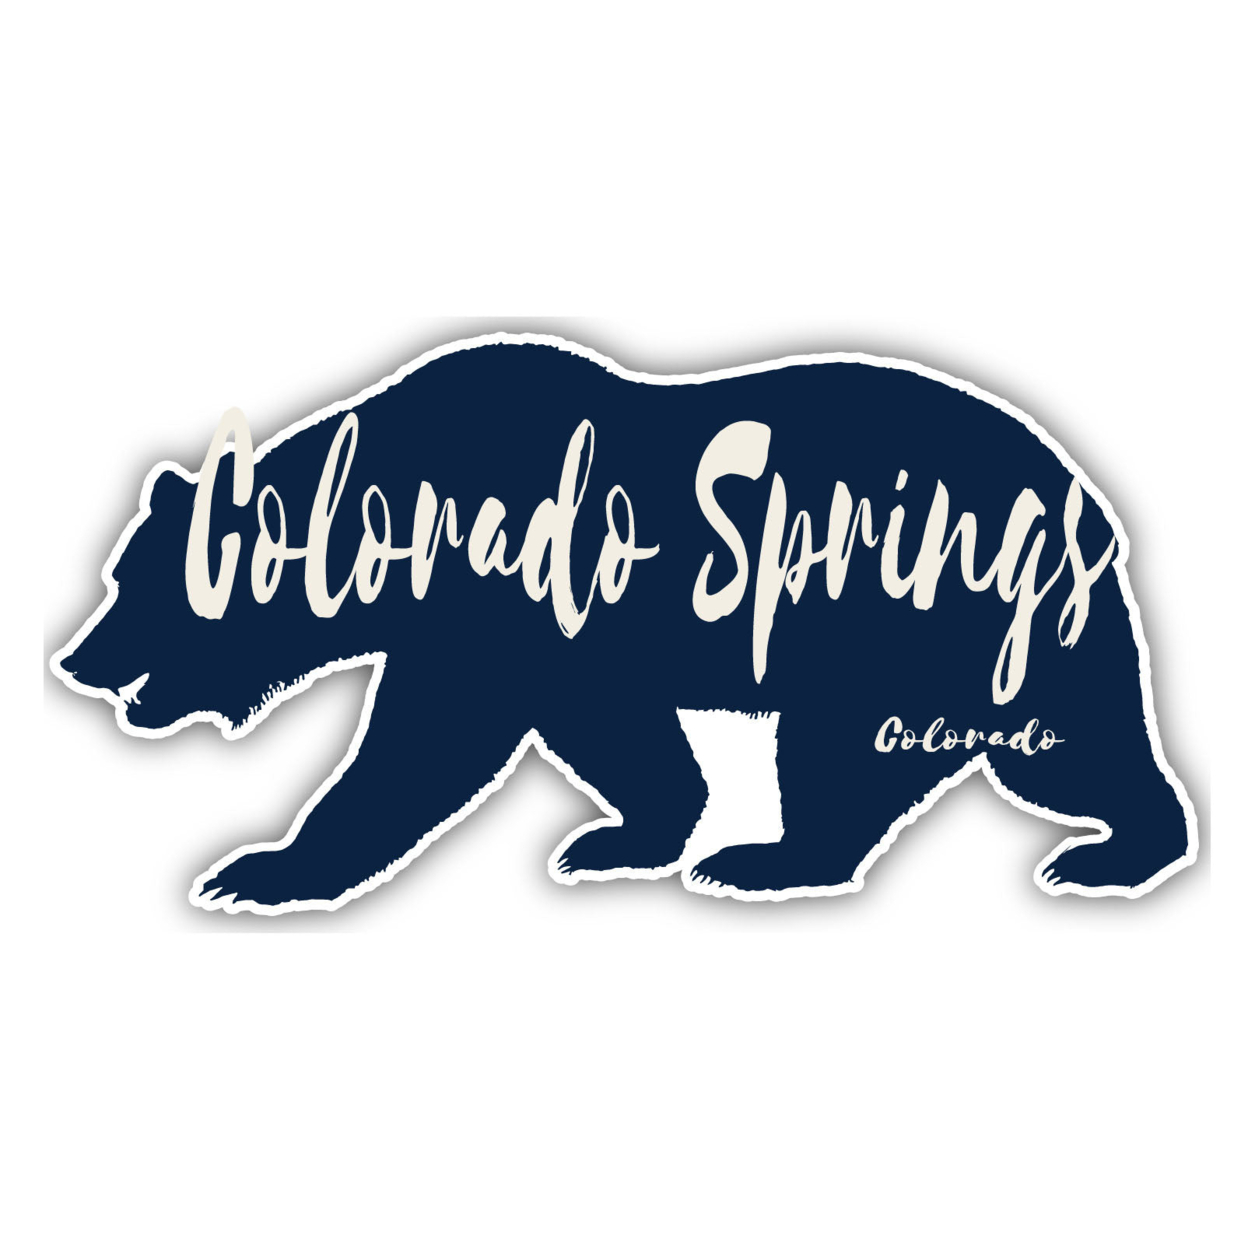 Colorado Springs Colorado Souvenir Decorative Stickers (Choose Theme And Size) - Single Unit, 6-Inch, Tent